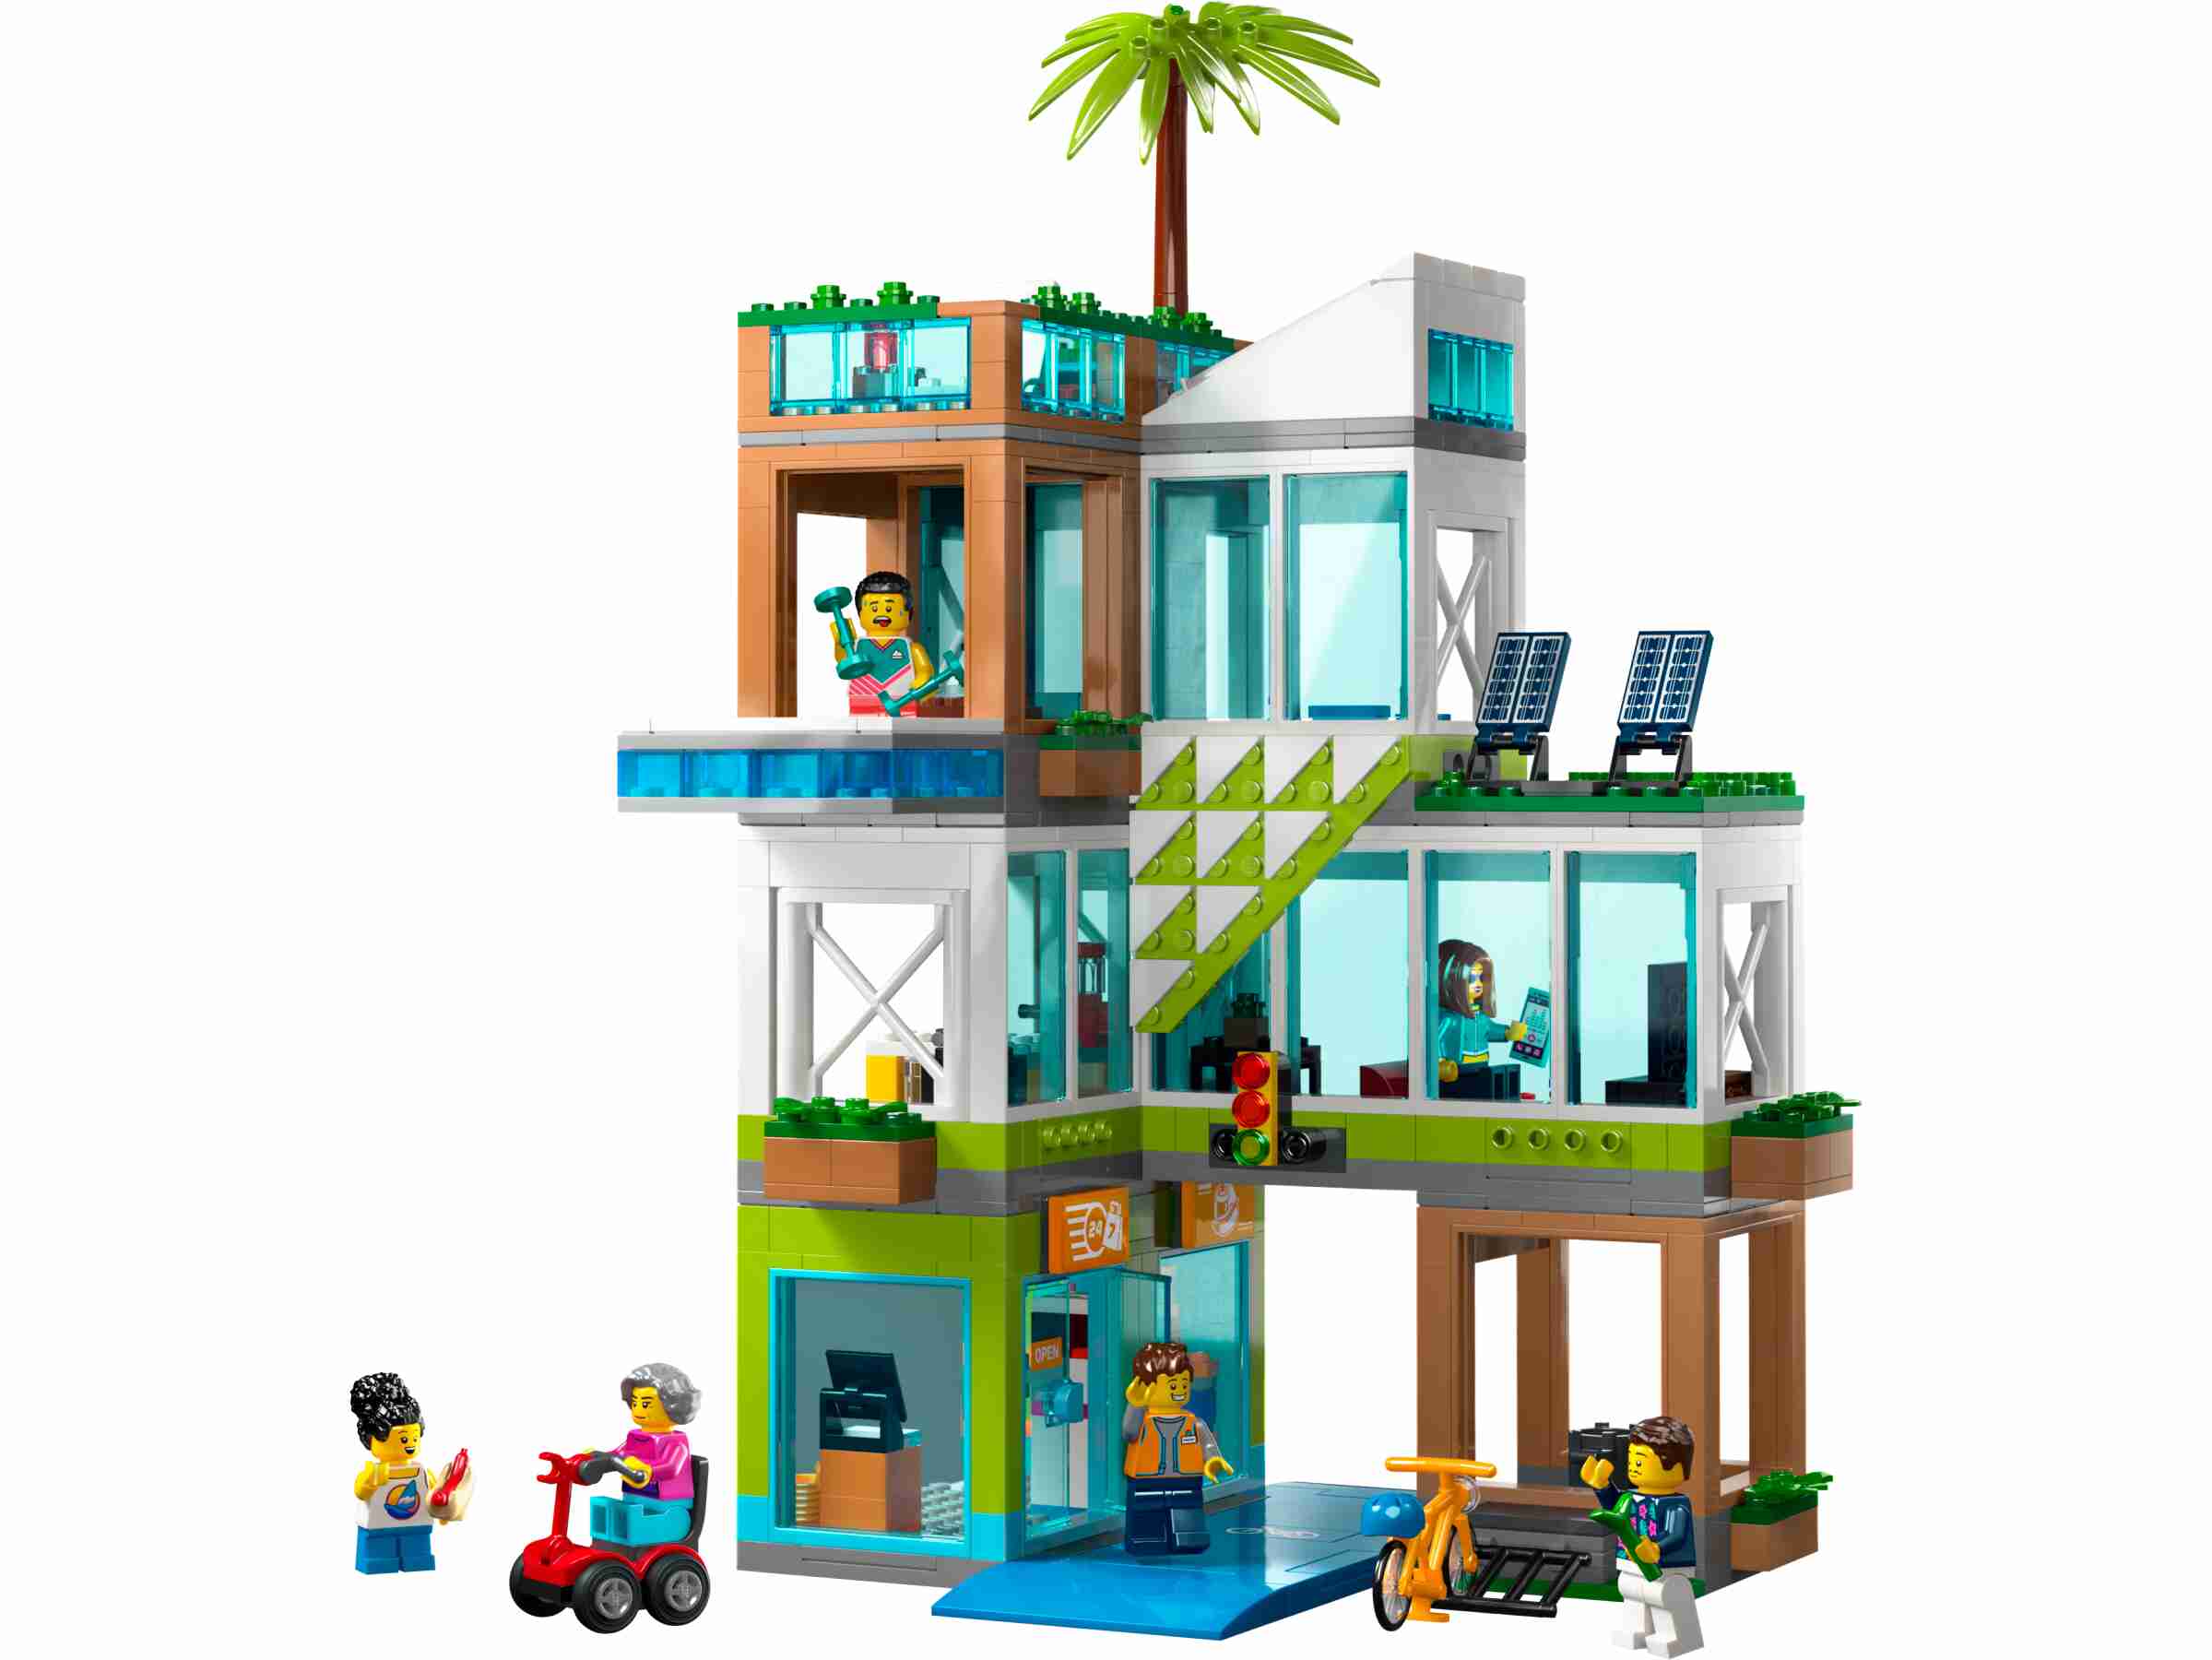 LEGO 60365 City Appartementhaus, Mini-Markt, 6 Minifiguren